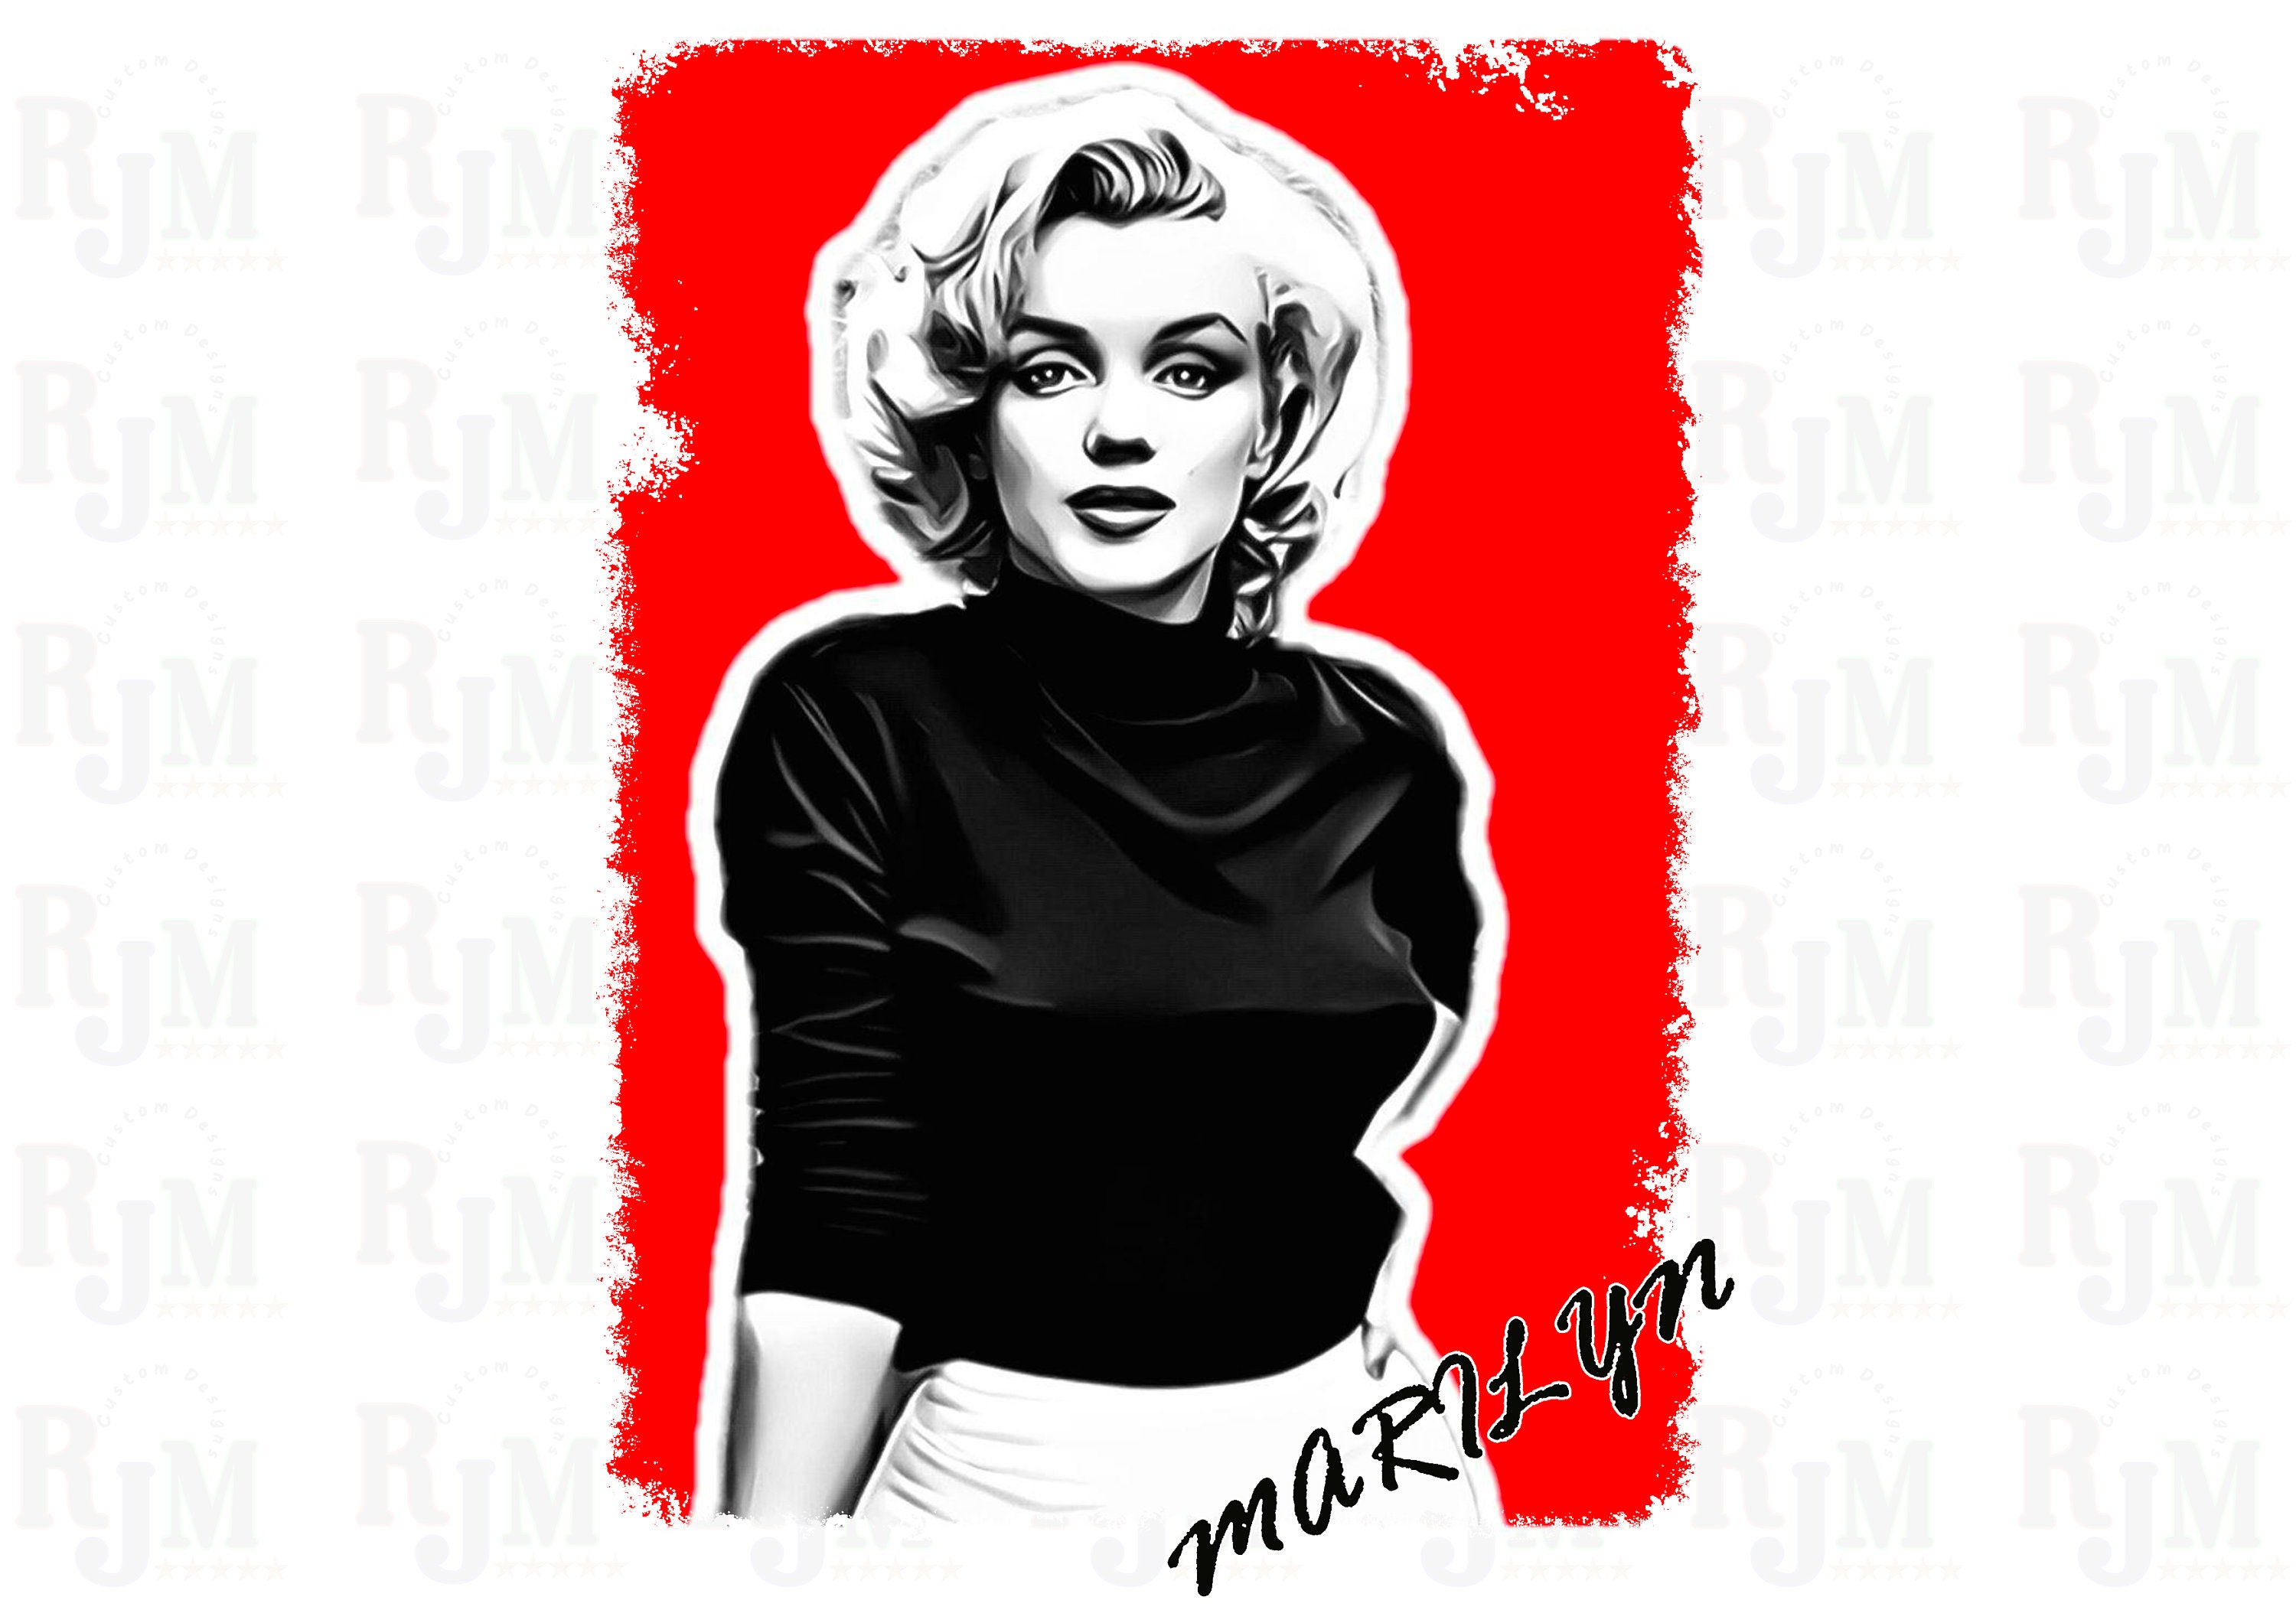 510 Marilyn Monroe Illustrations Images Stock Photos  Vectors   Shutterstock